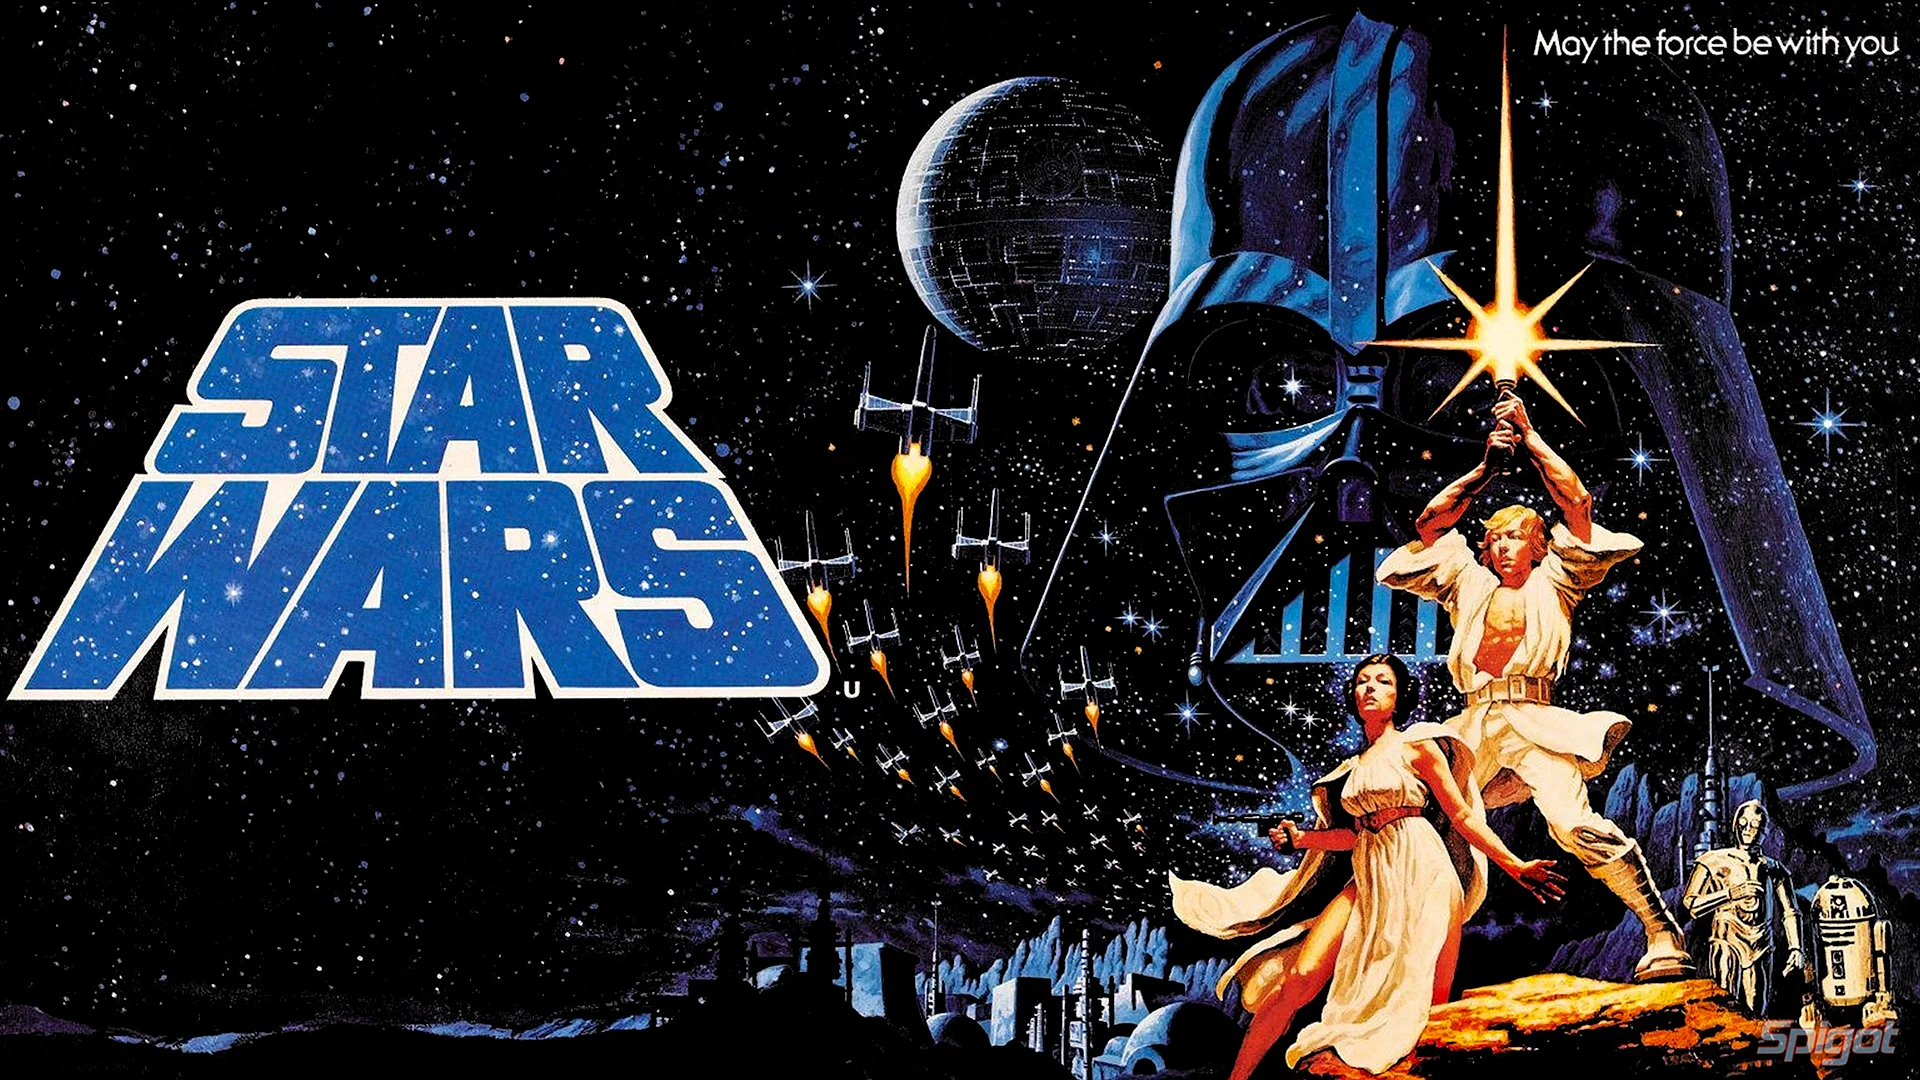 Star Wars 1977 Wallpaper